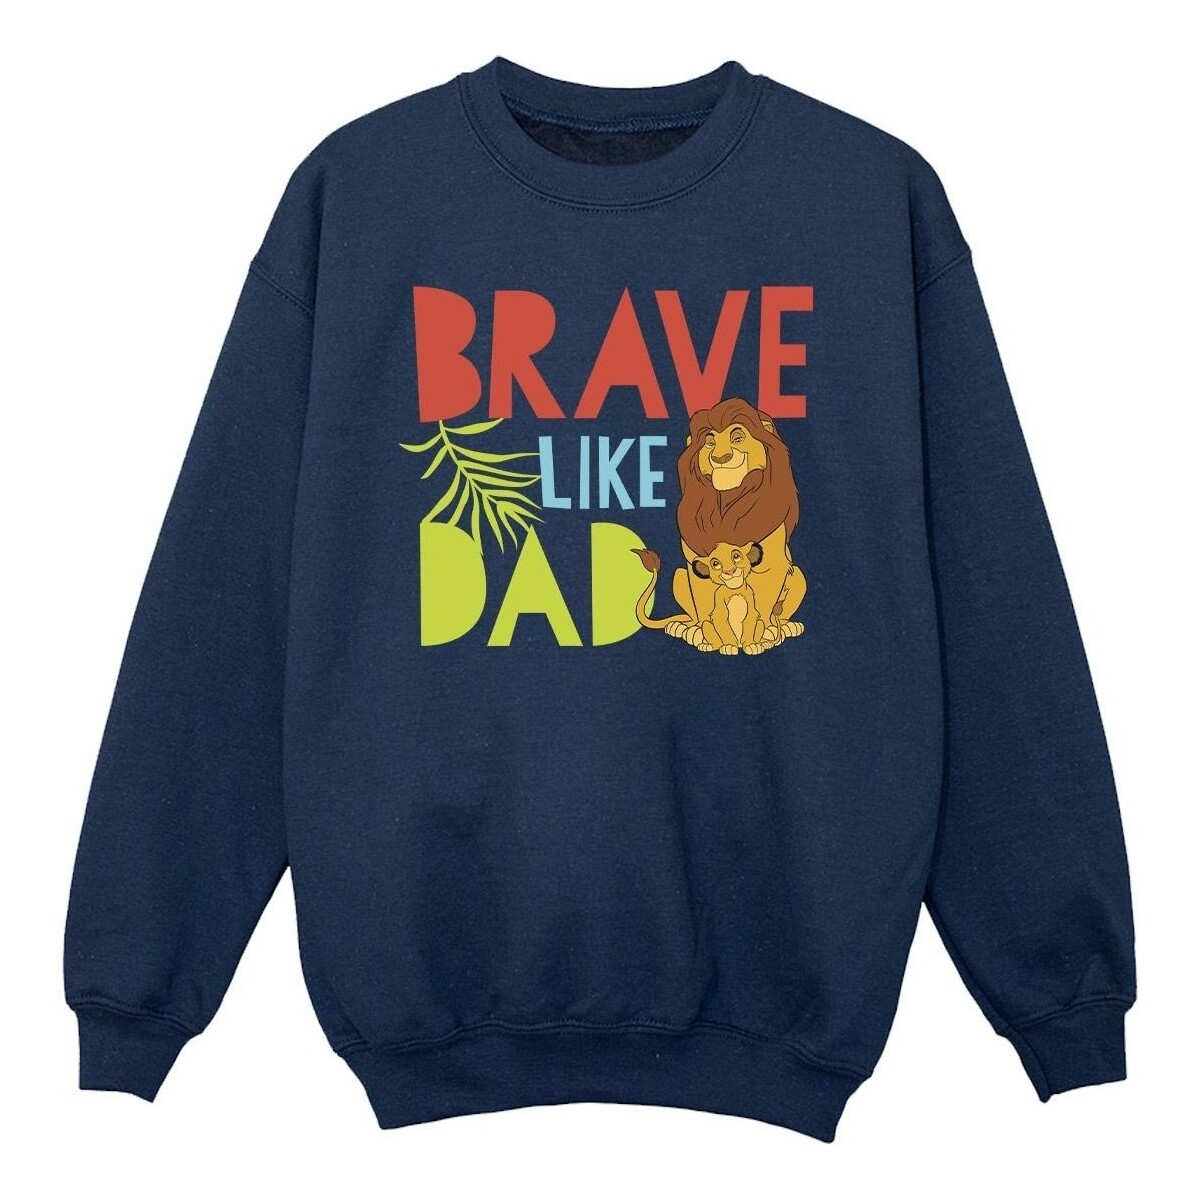 Vêtements Fille Sweats Disney The Lion King Brave Like Dad Bleu